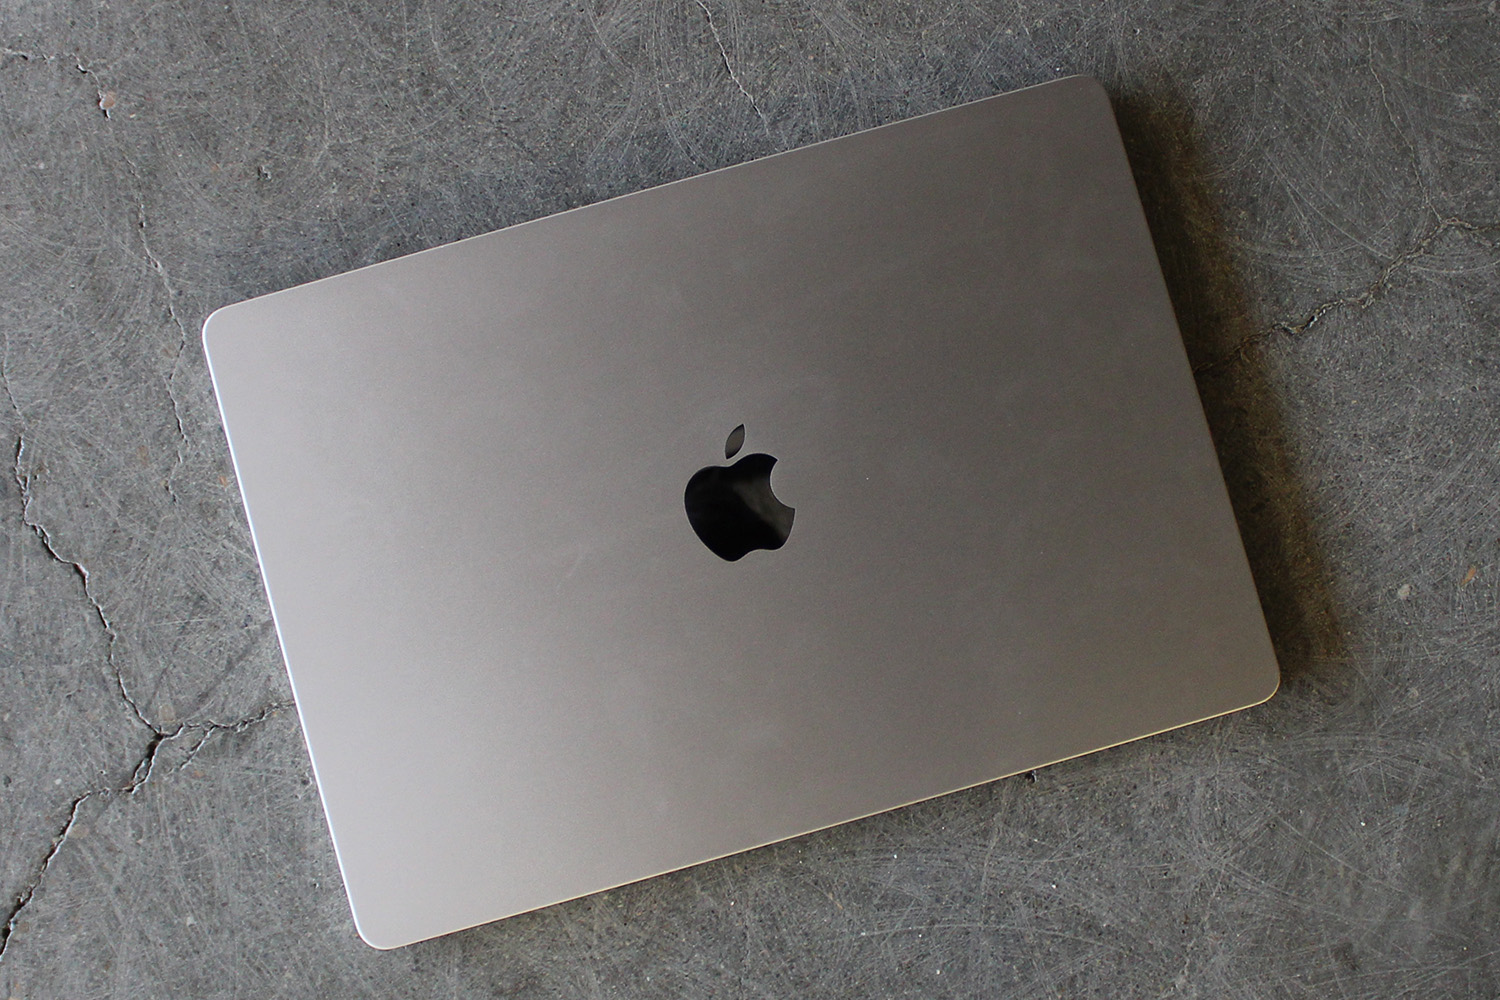 NEW 15 inch MacBook Air VS 13 inch MacBook Air REVIEW of Specs! 